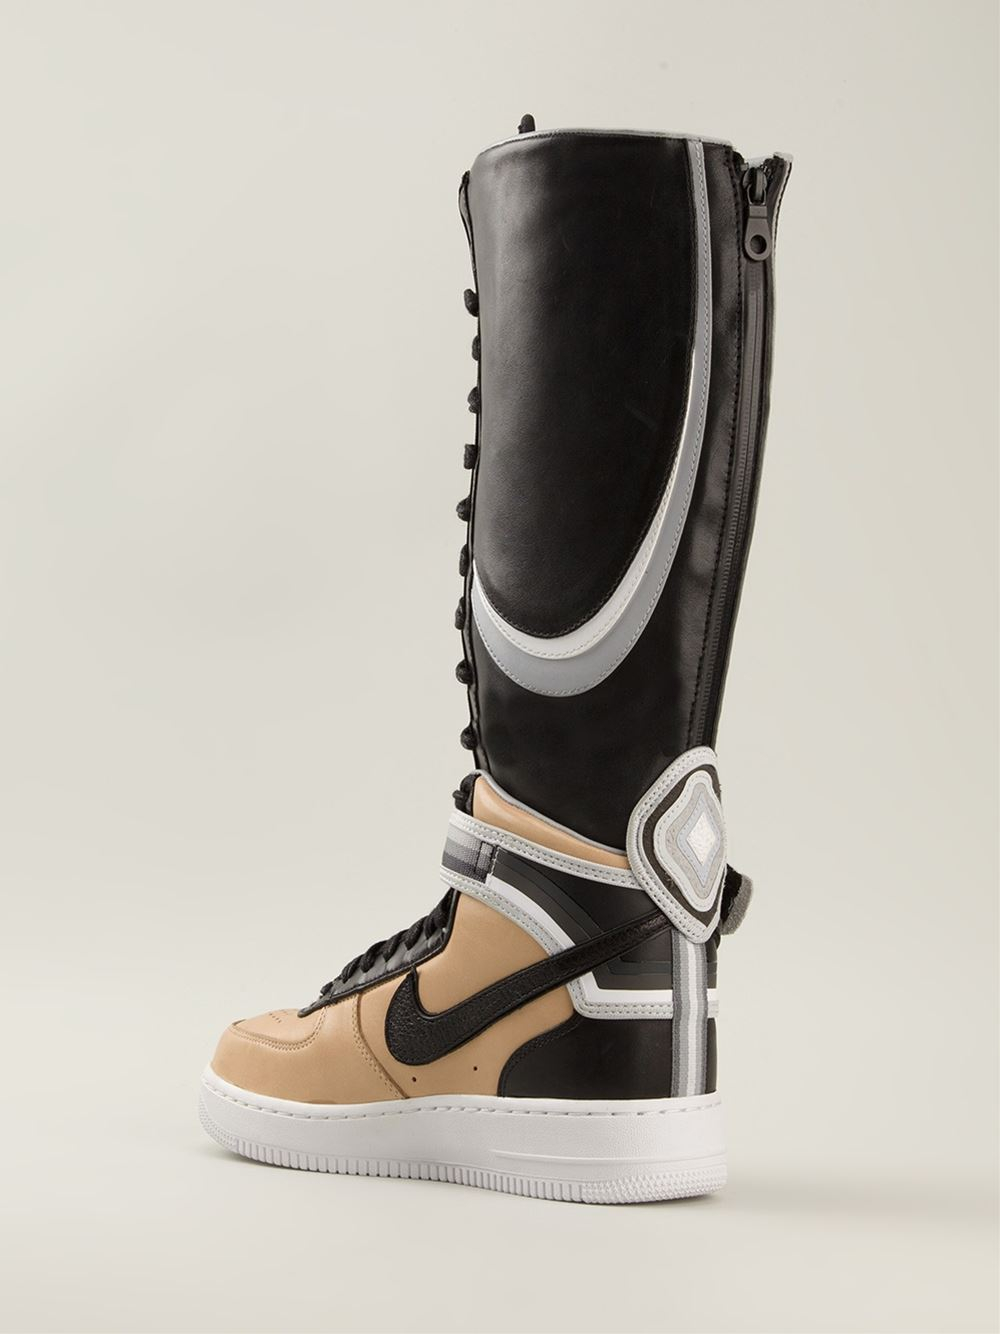 Nike Thigh High Boots Discount, SAVE 42% - piv-phuket.com